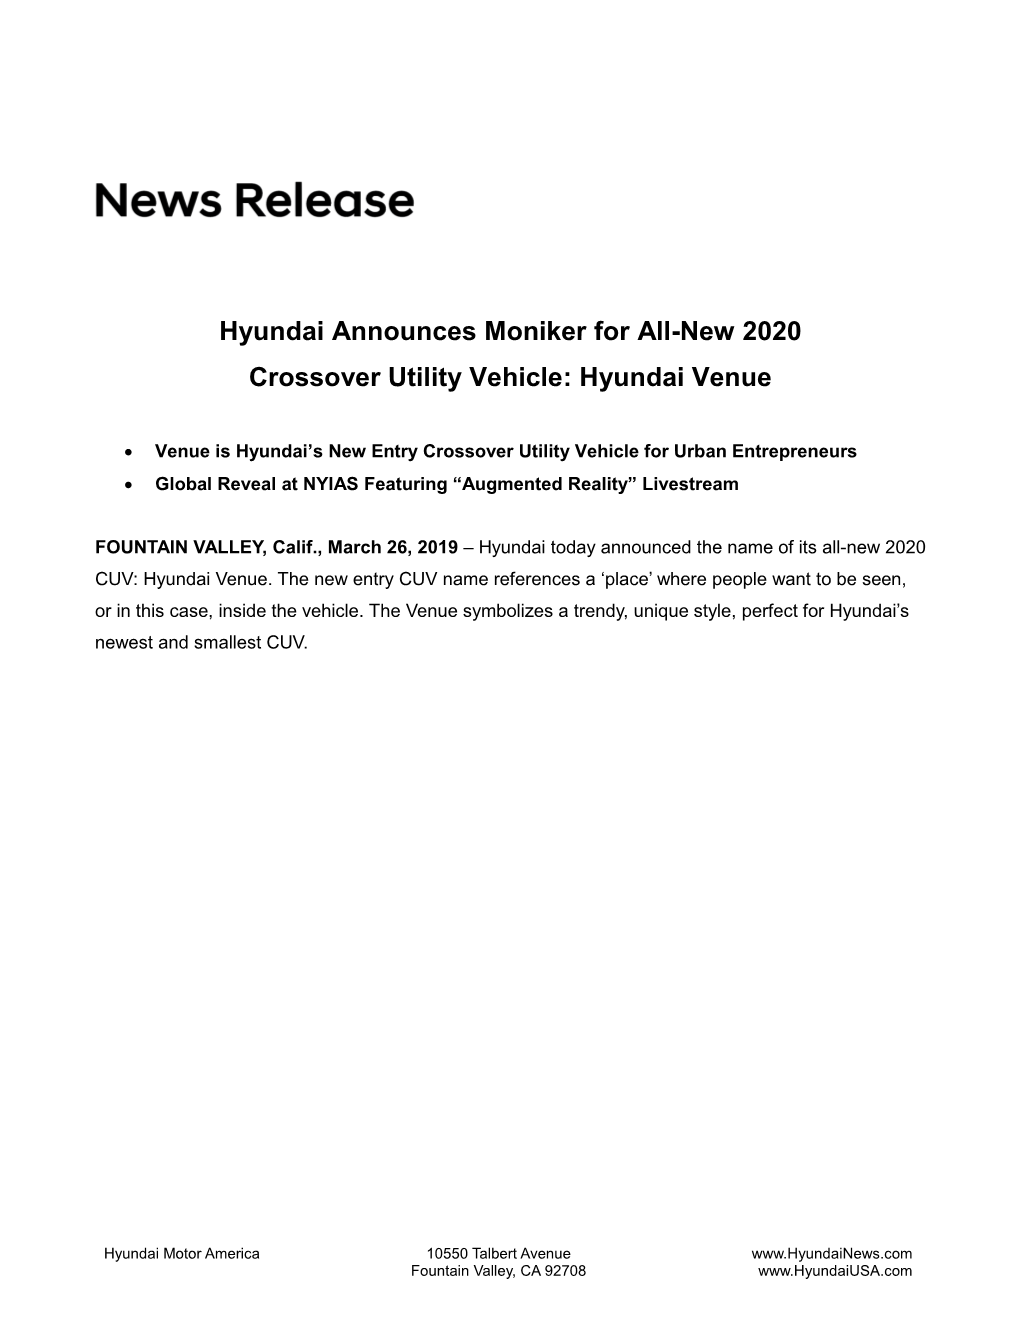 Hyundai Announces Moniker for All-New 2020 Crossover Utility Vehicle: Hyundai Venue